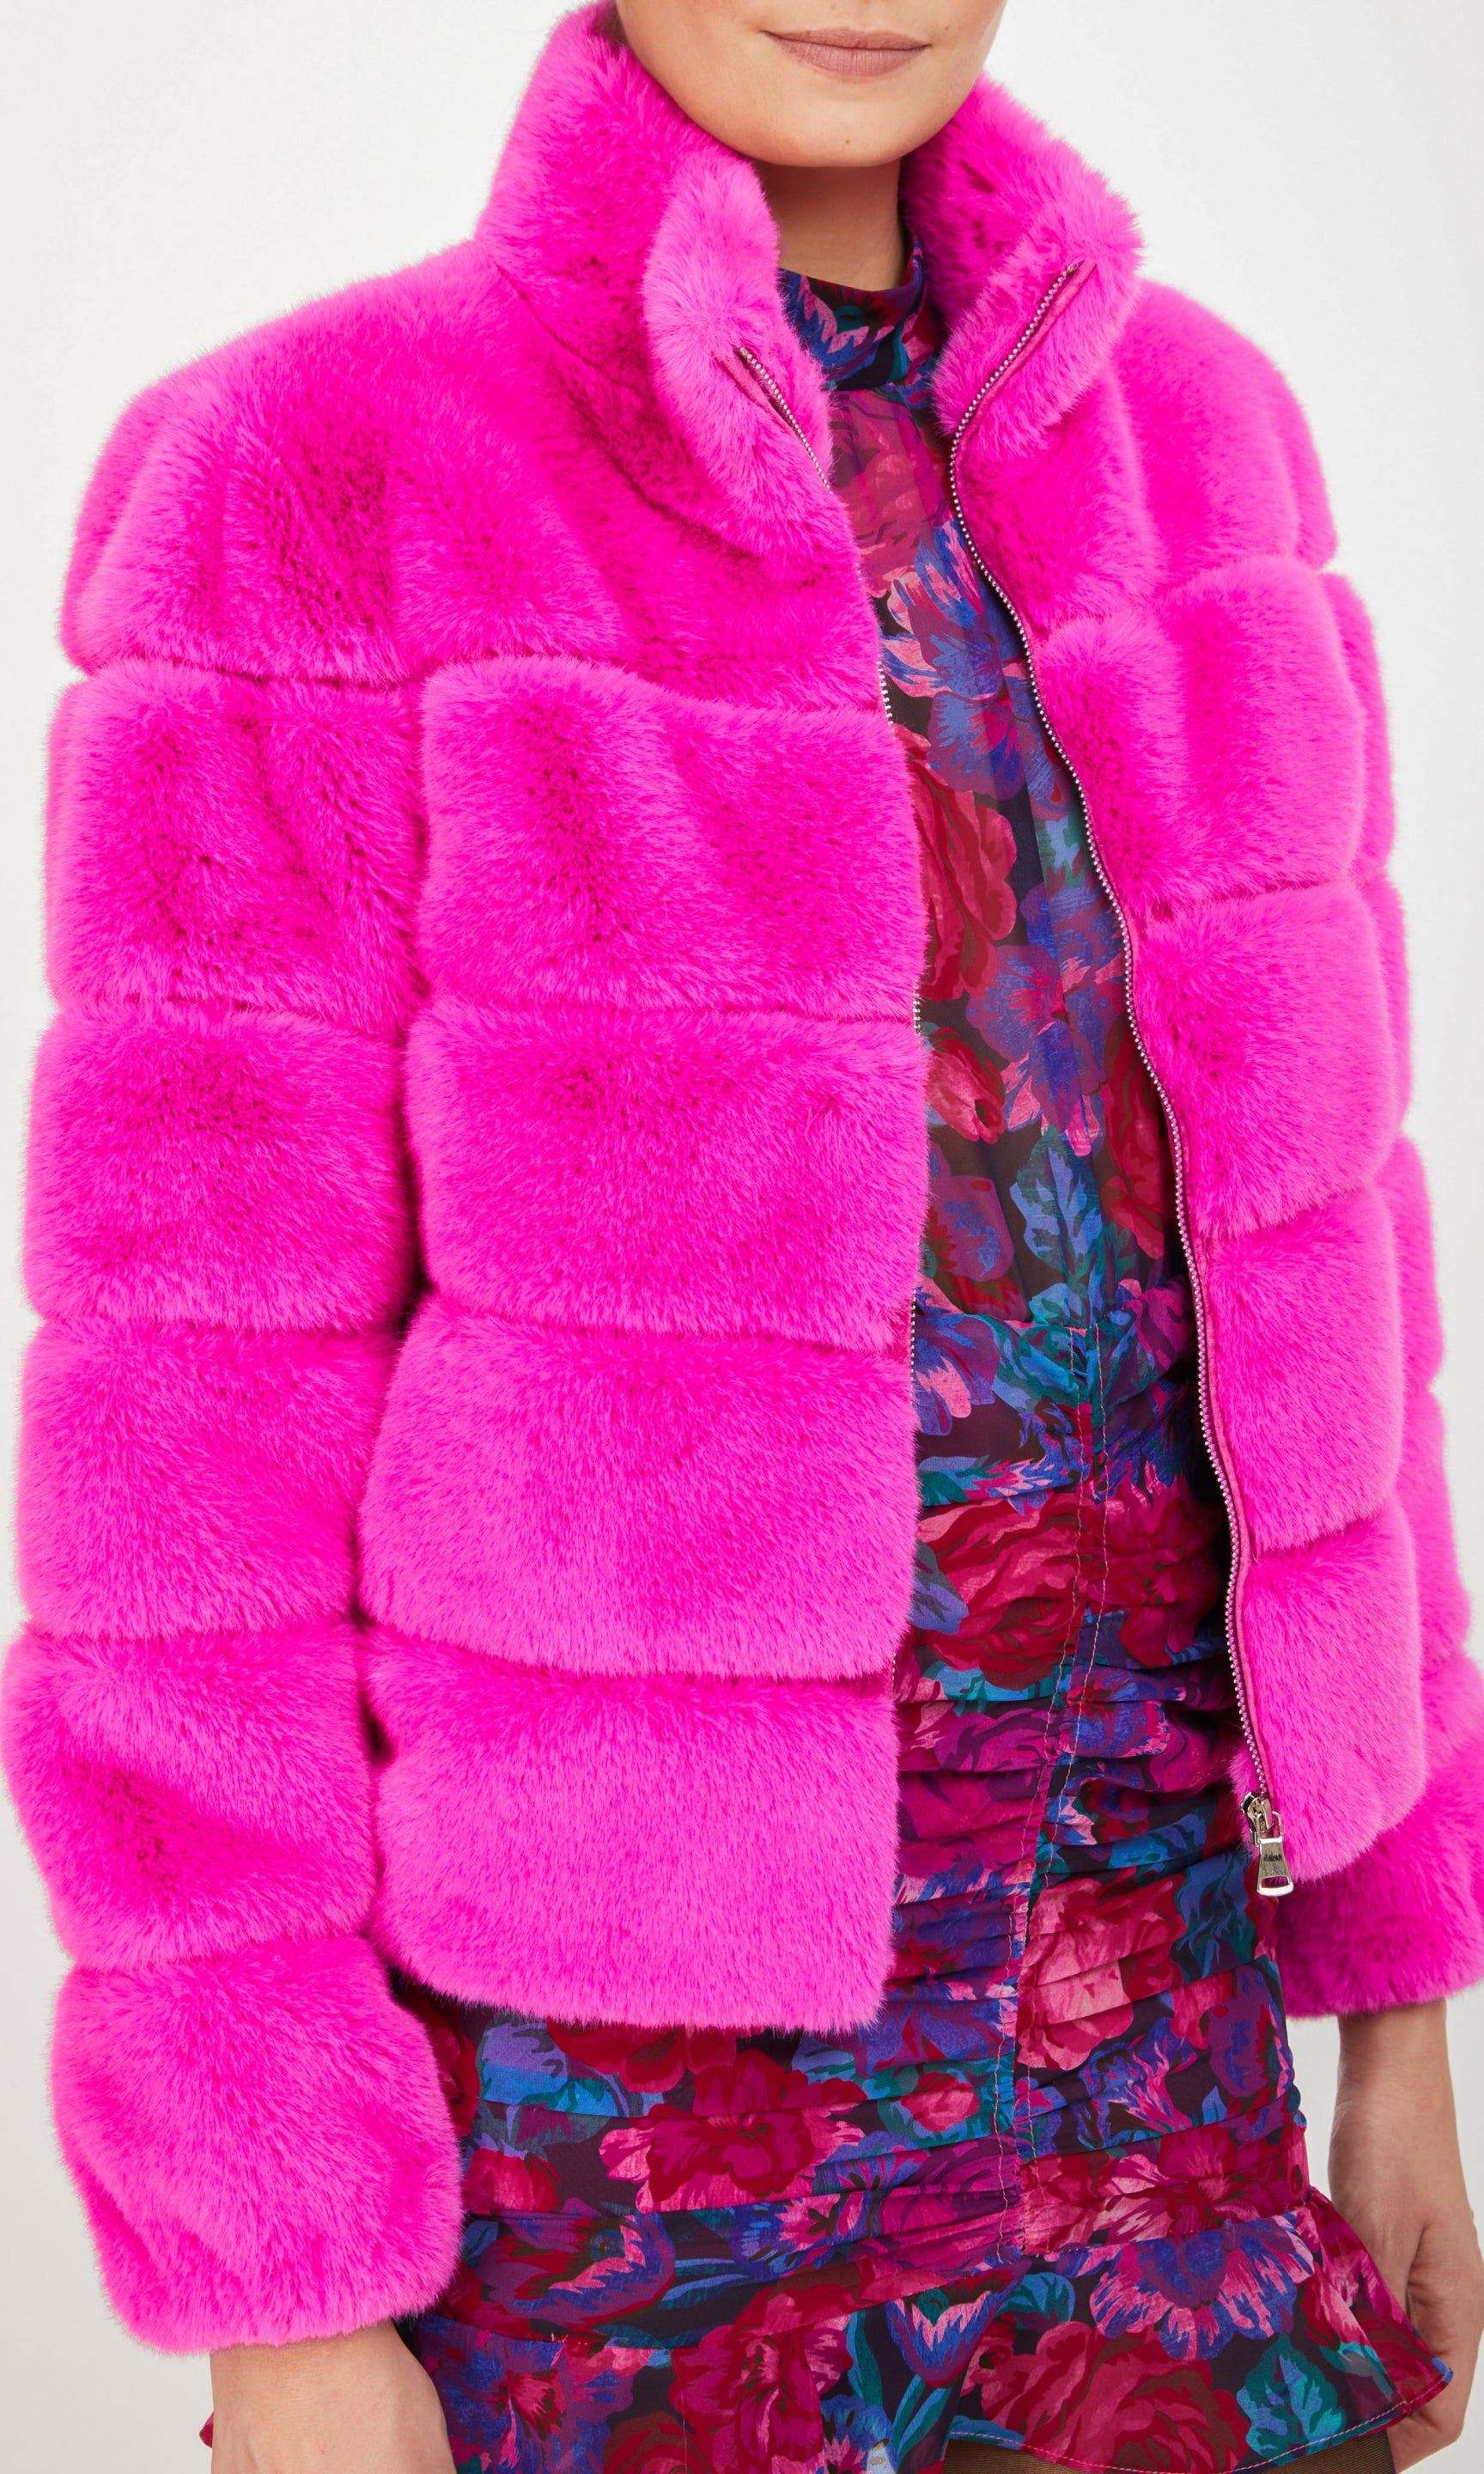 Mini We're Always Together Faux Fur Jacket - Hot Pink